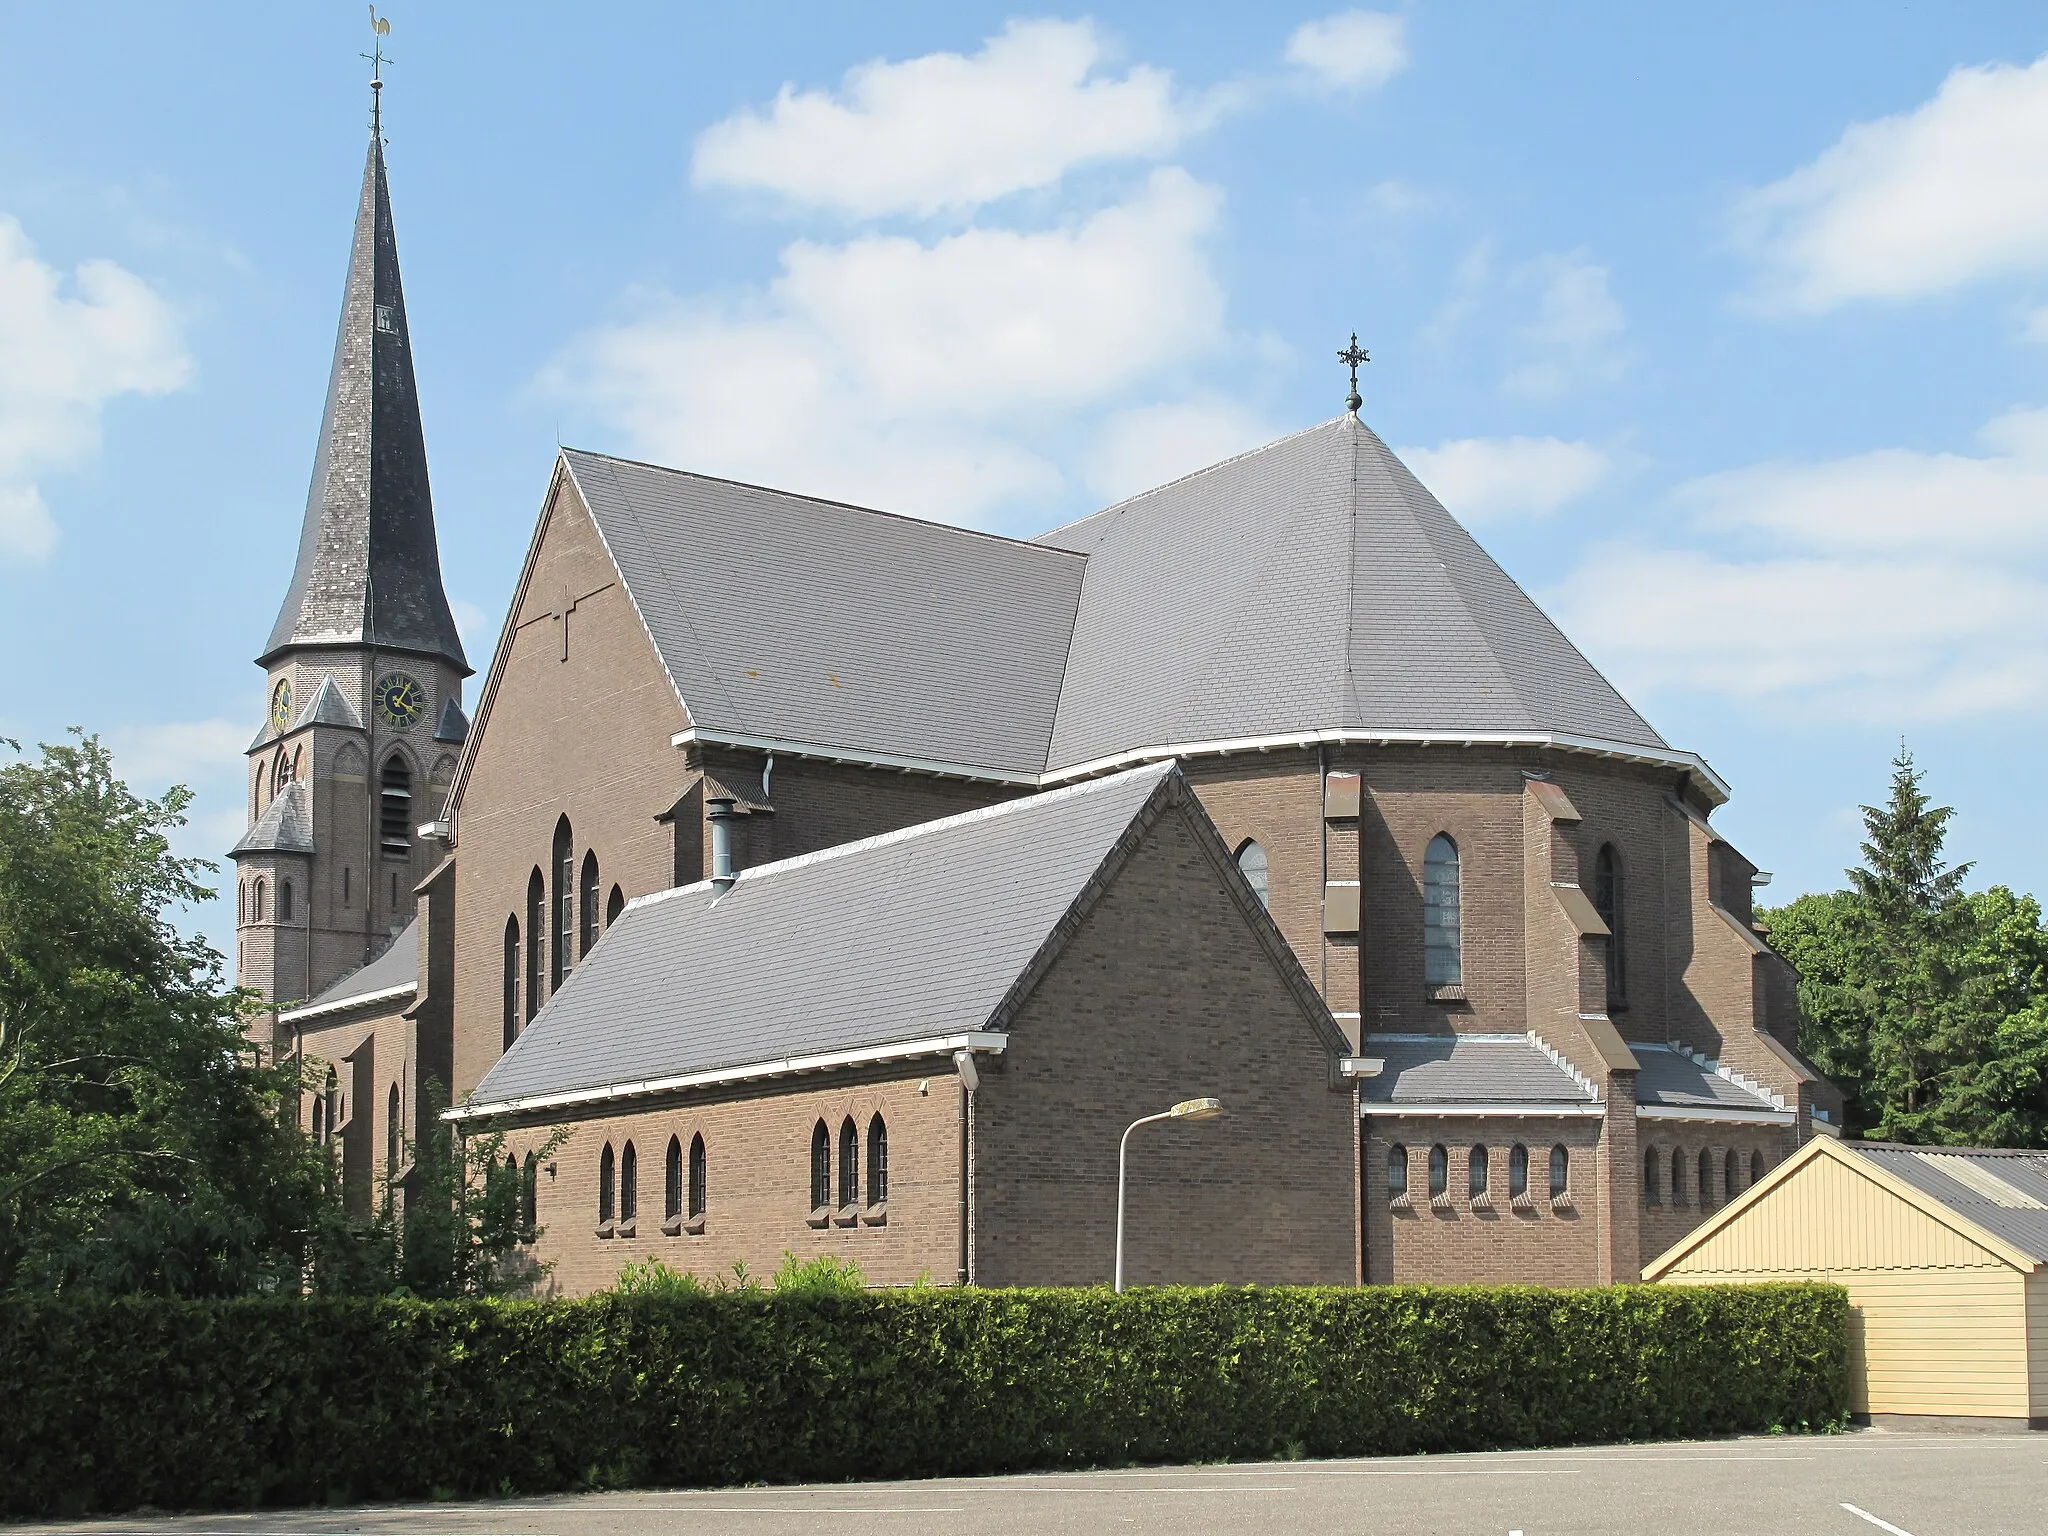 Photo showing: Wolvega, church: de Sint Franciscuskerk